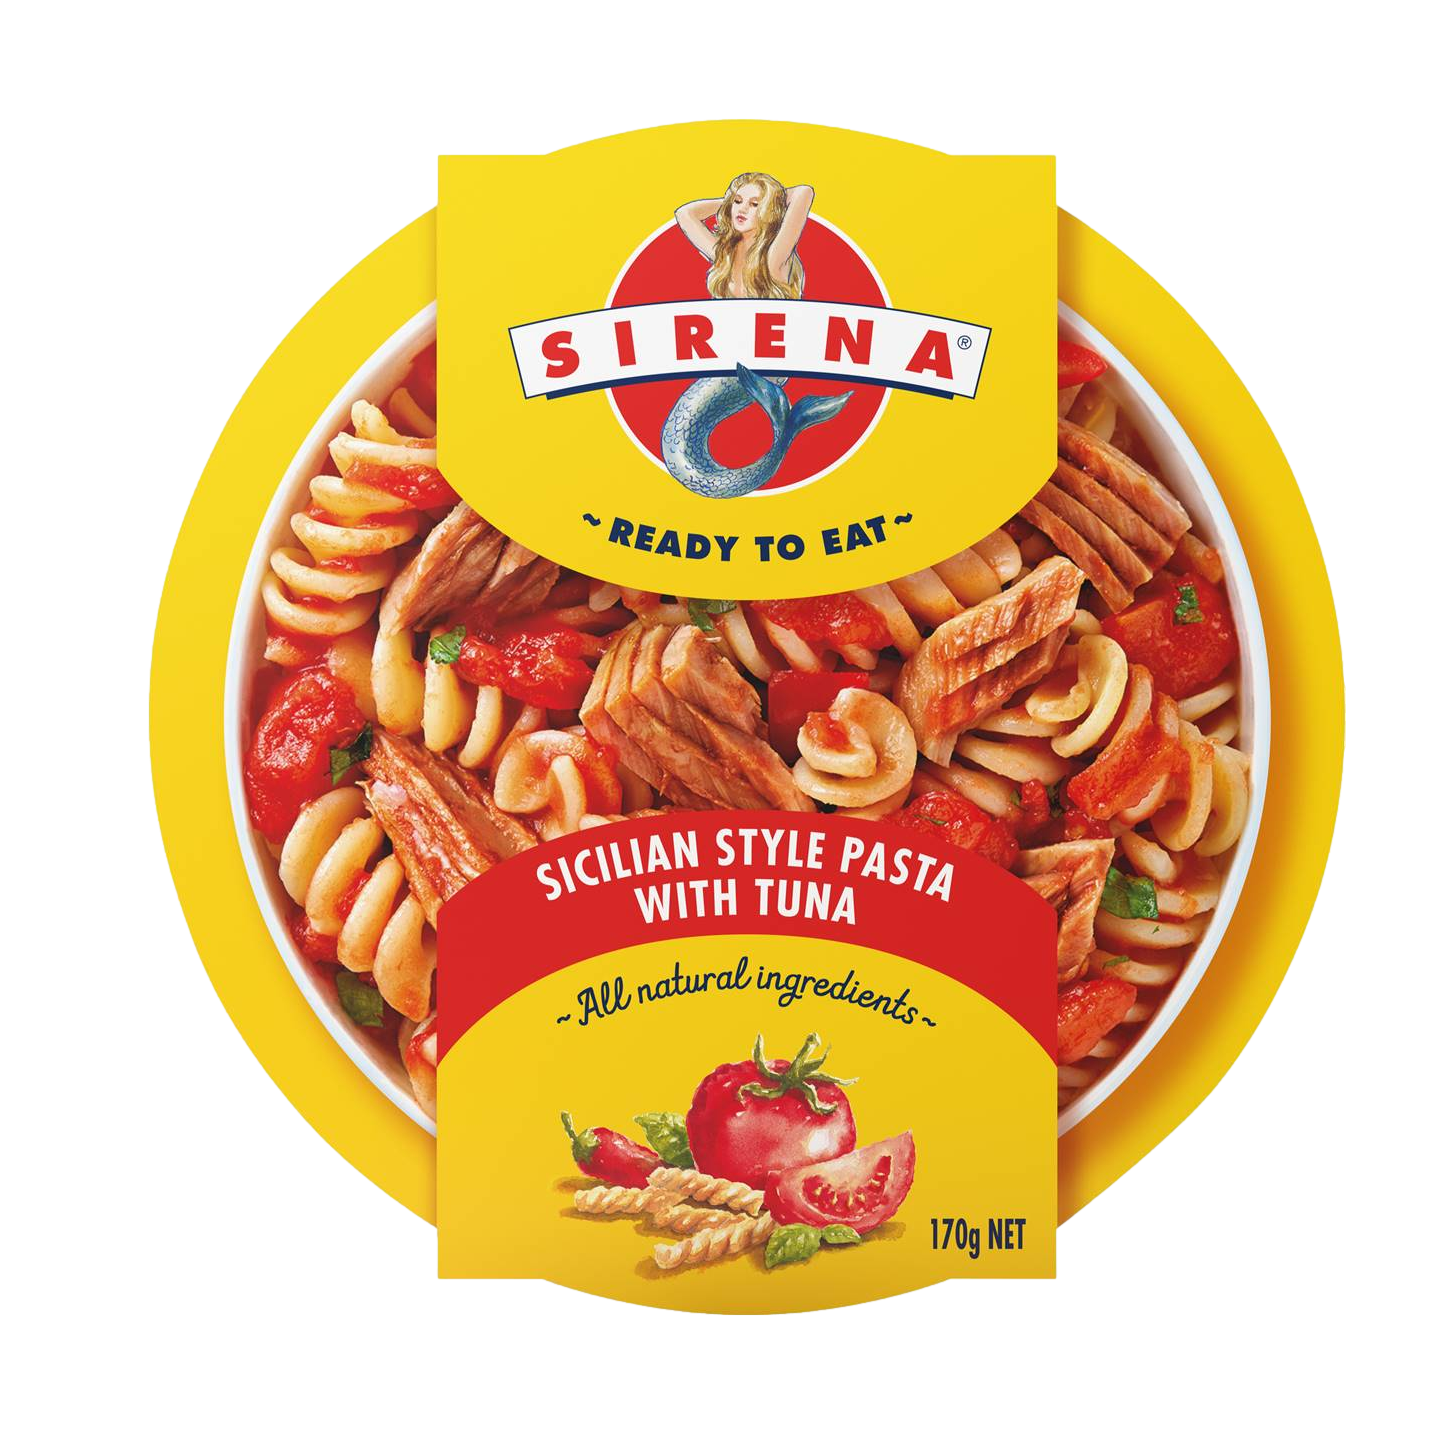 Sirena Ready To Eat Sicilian Style Pasta with Tuna 170g